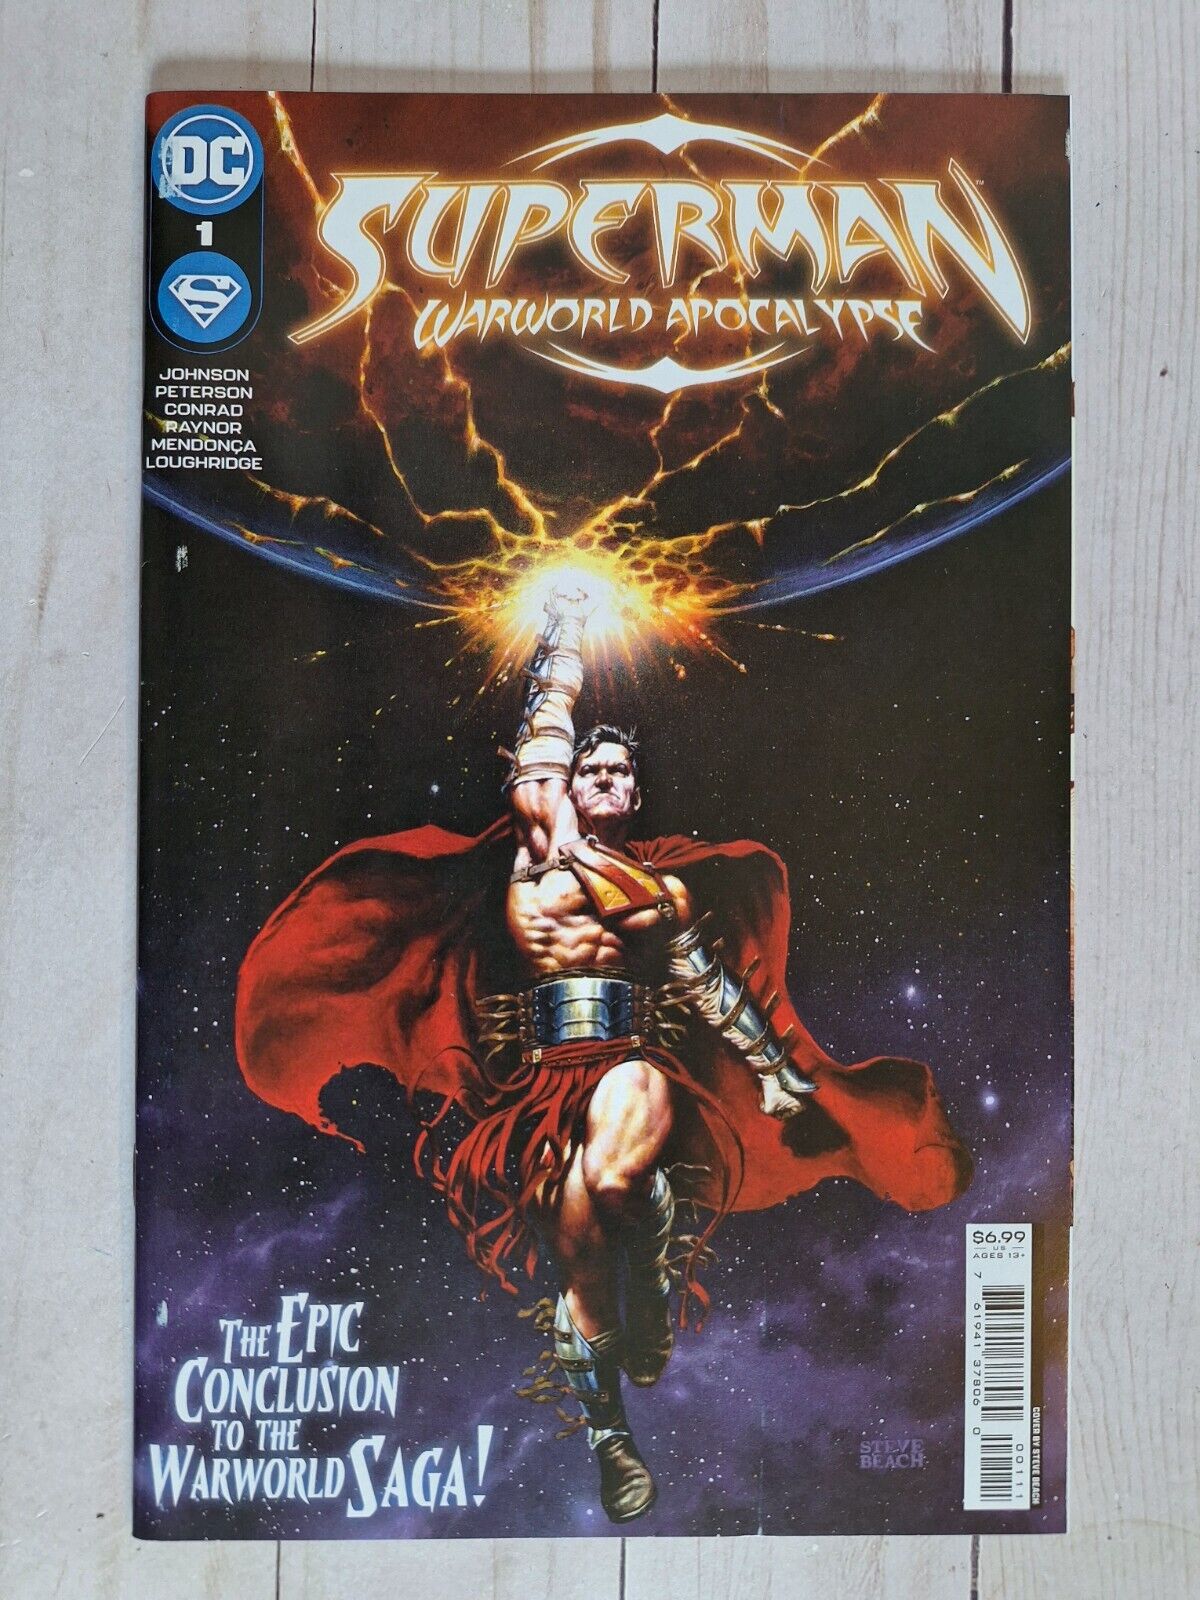 SUPERMAN WARWORLD APOCALYPSE #1 (VF/NM) DC COMICS 